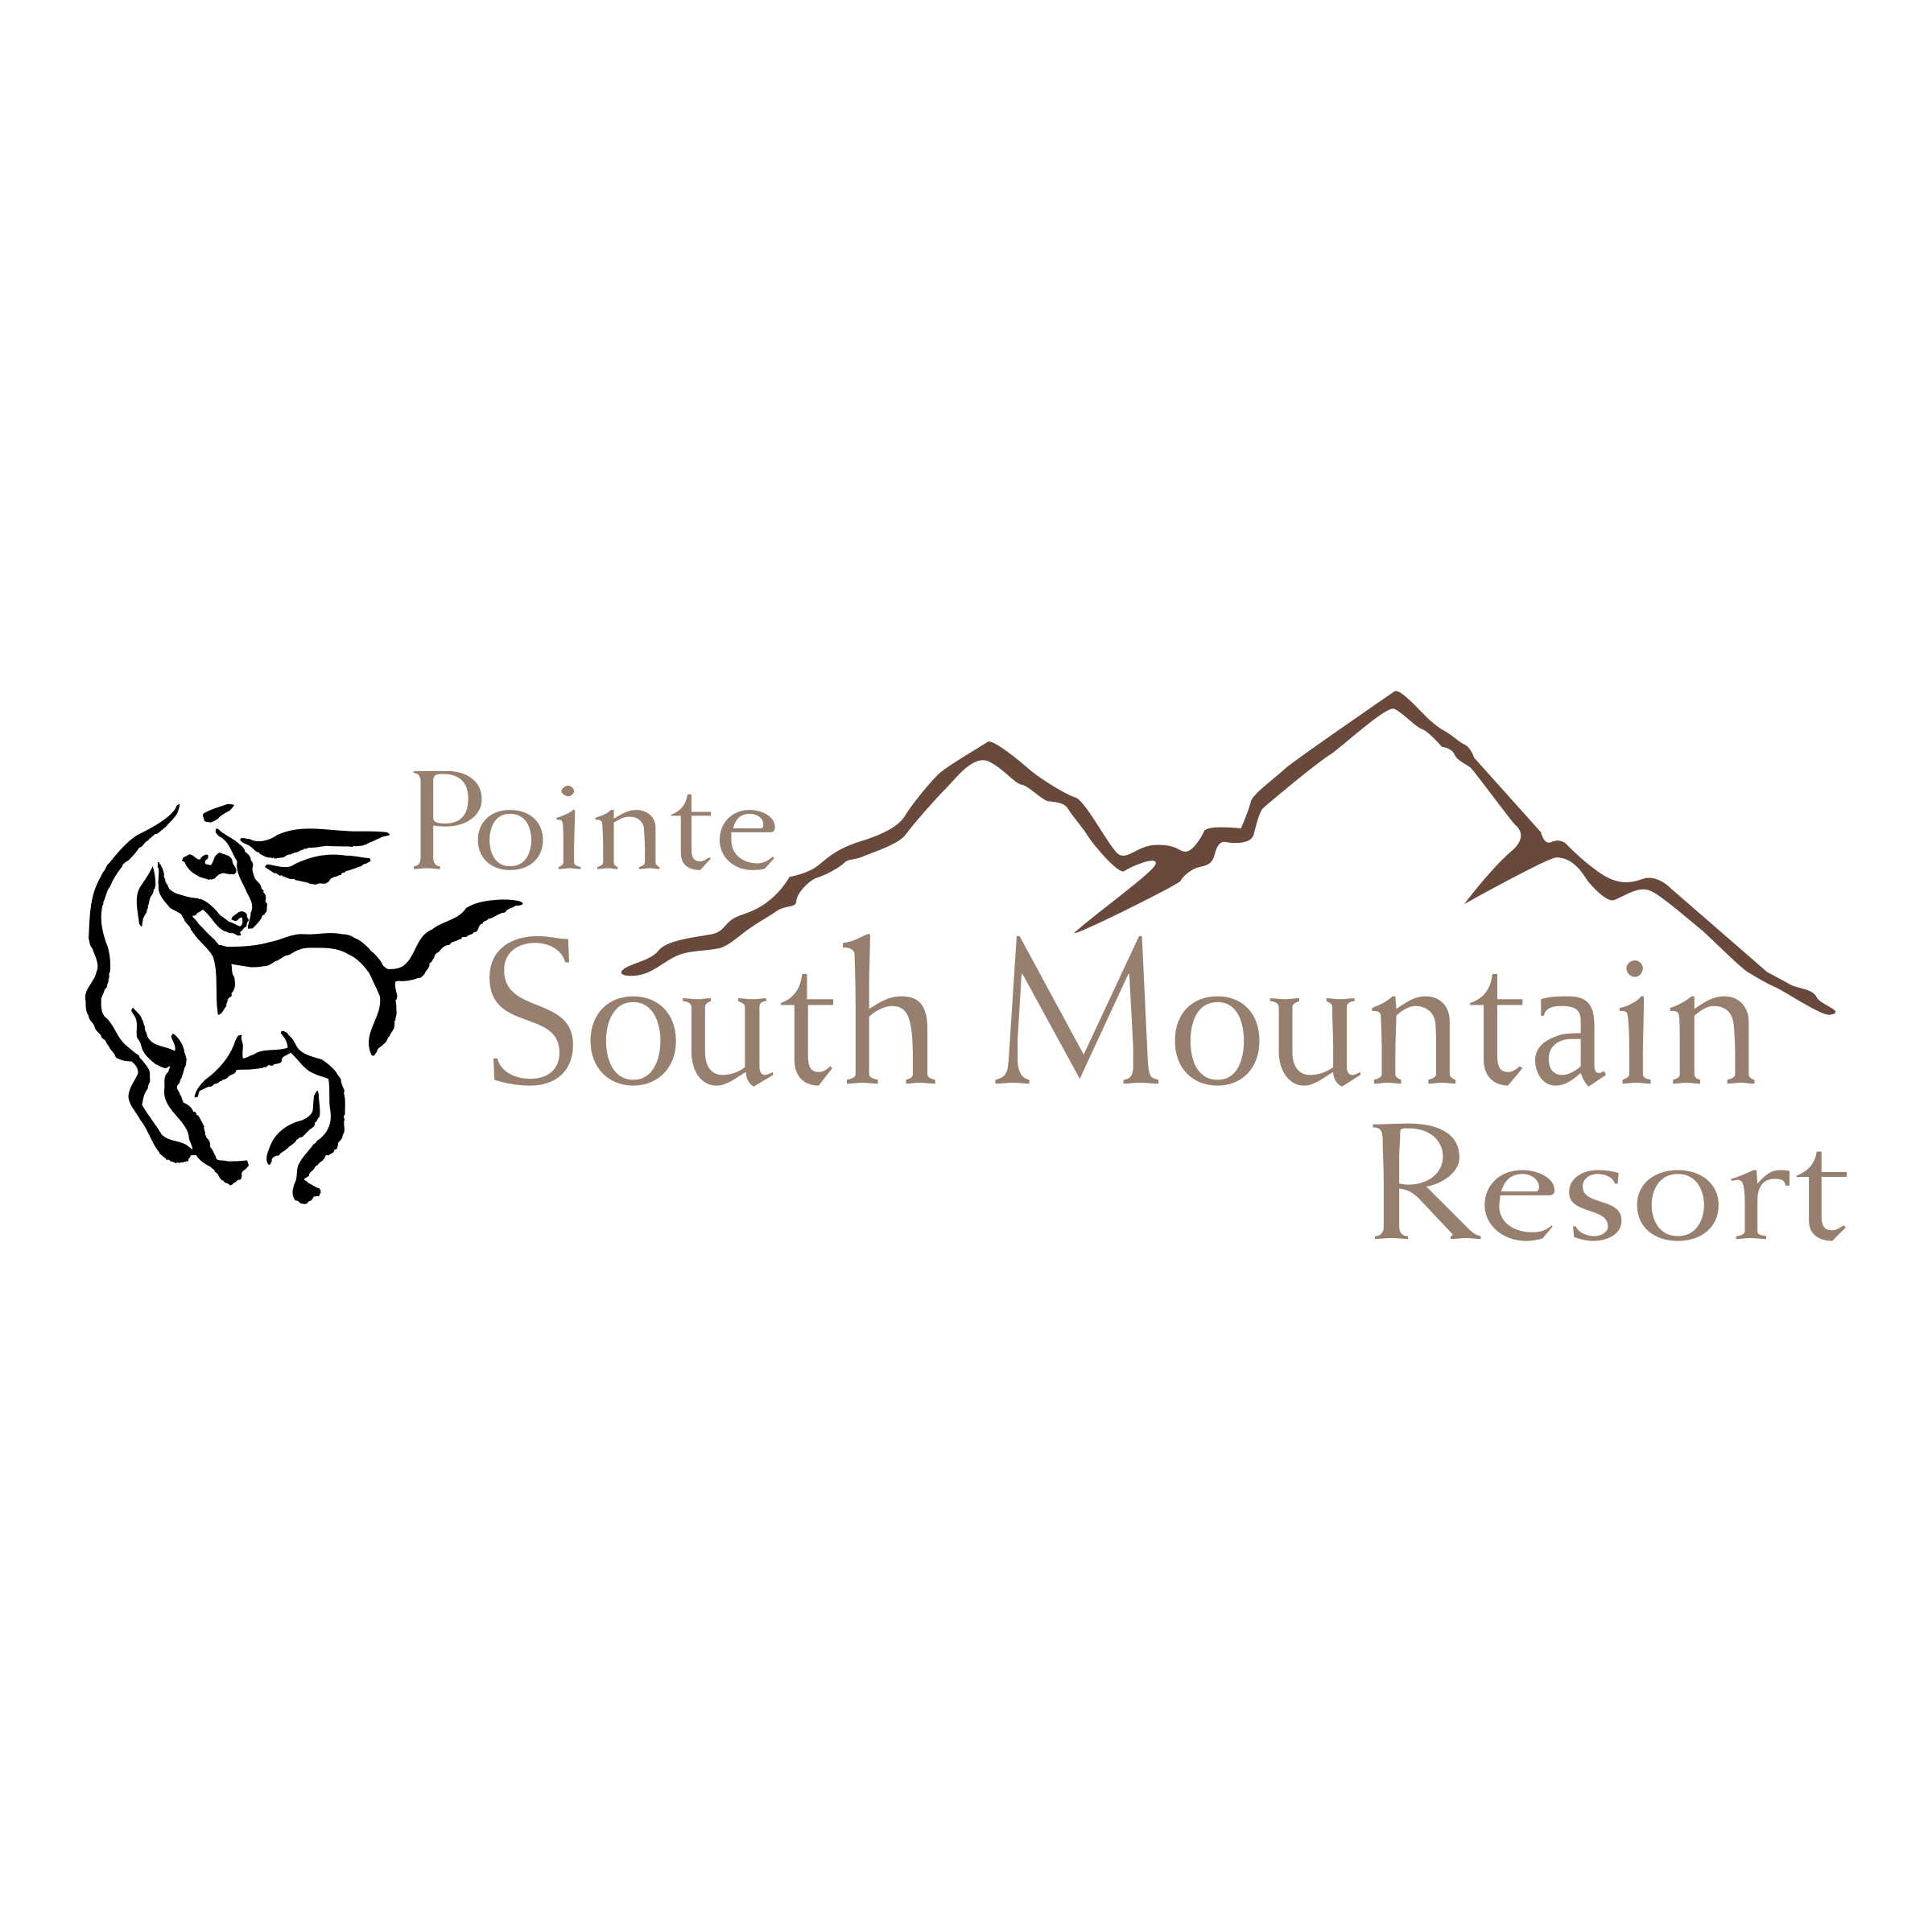 South Mountain Logo - Pointe South Mountain Resort Logo PNG Transparent & SVG Vector ...